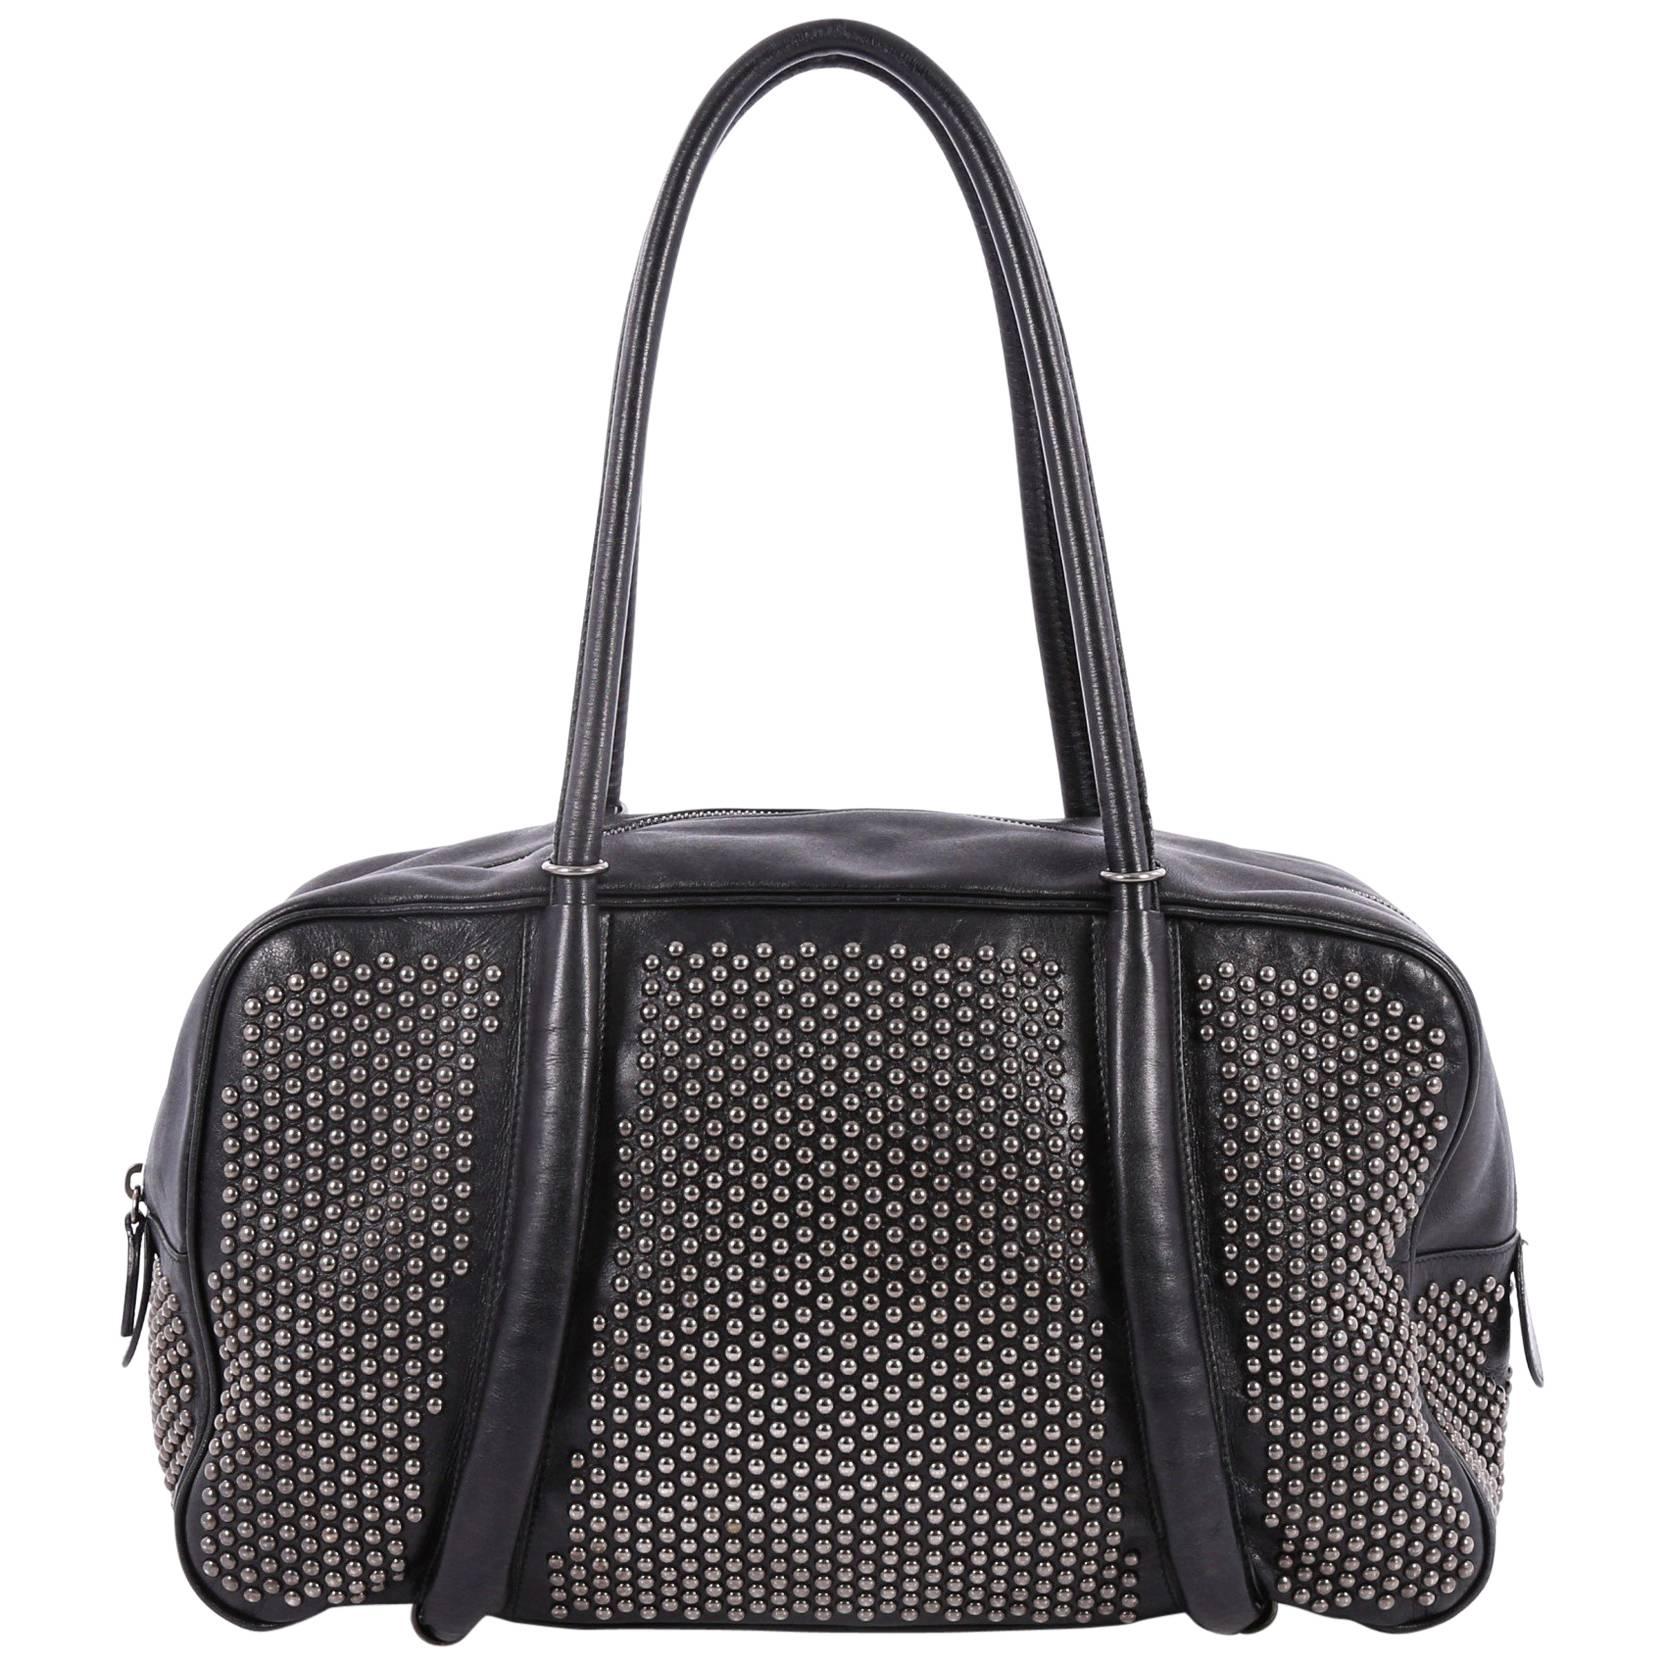  Alaia Duffle Bag Studded Leather Medium